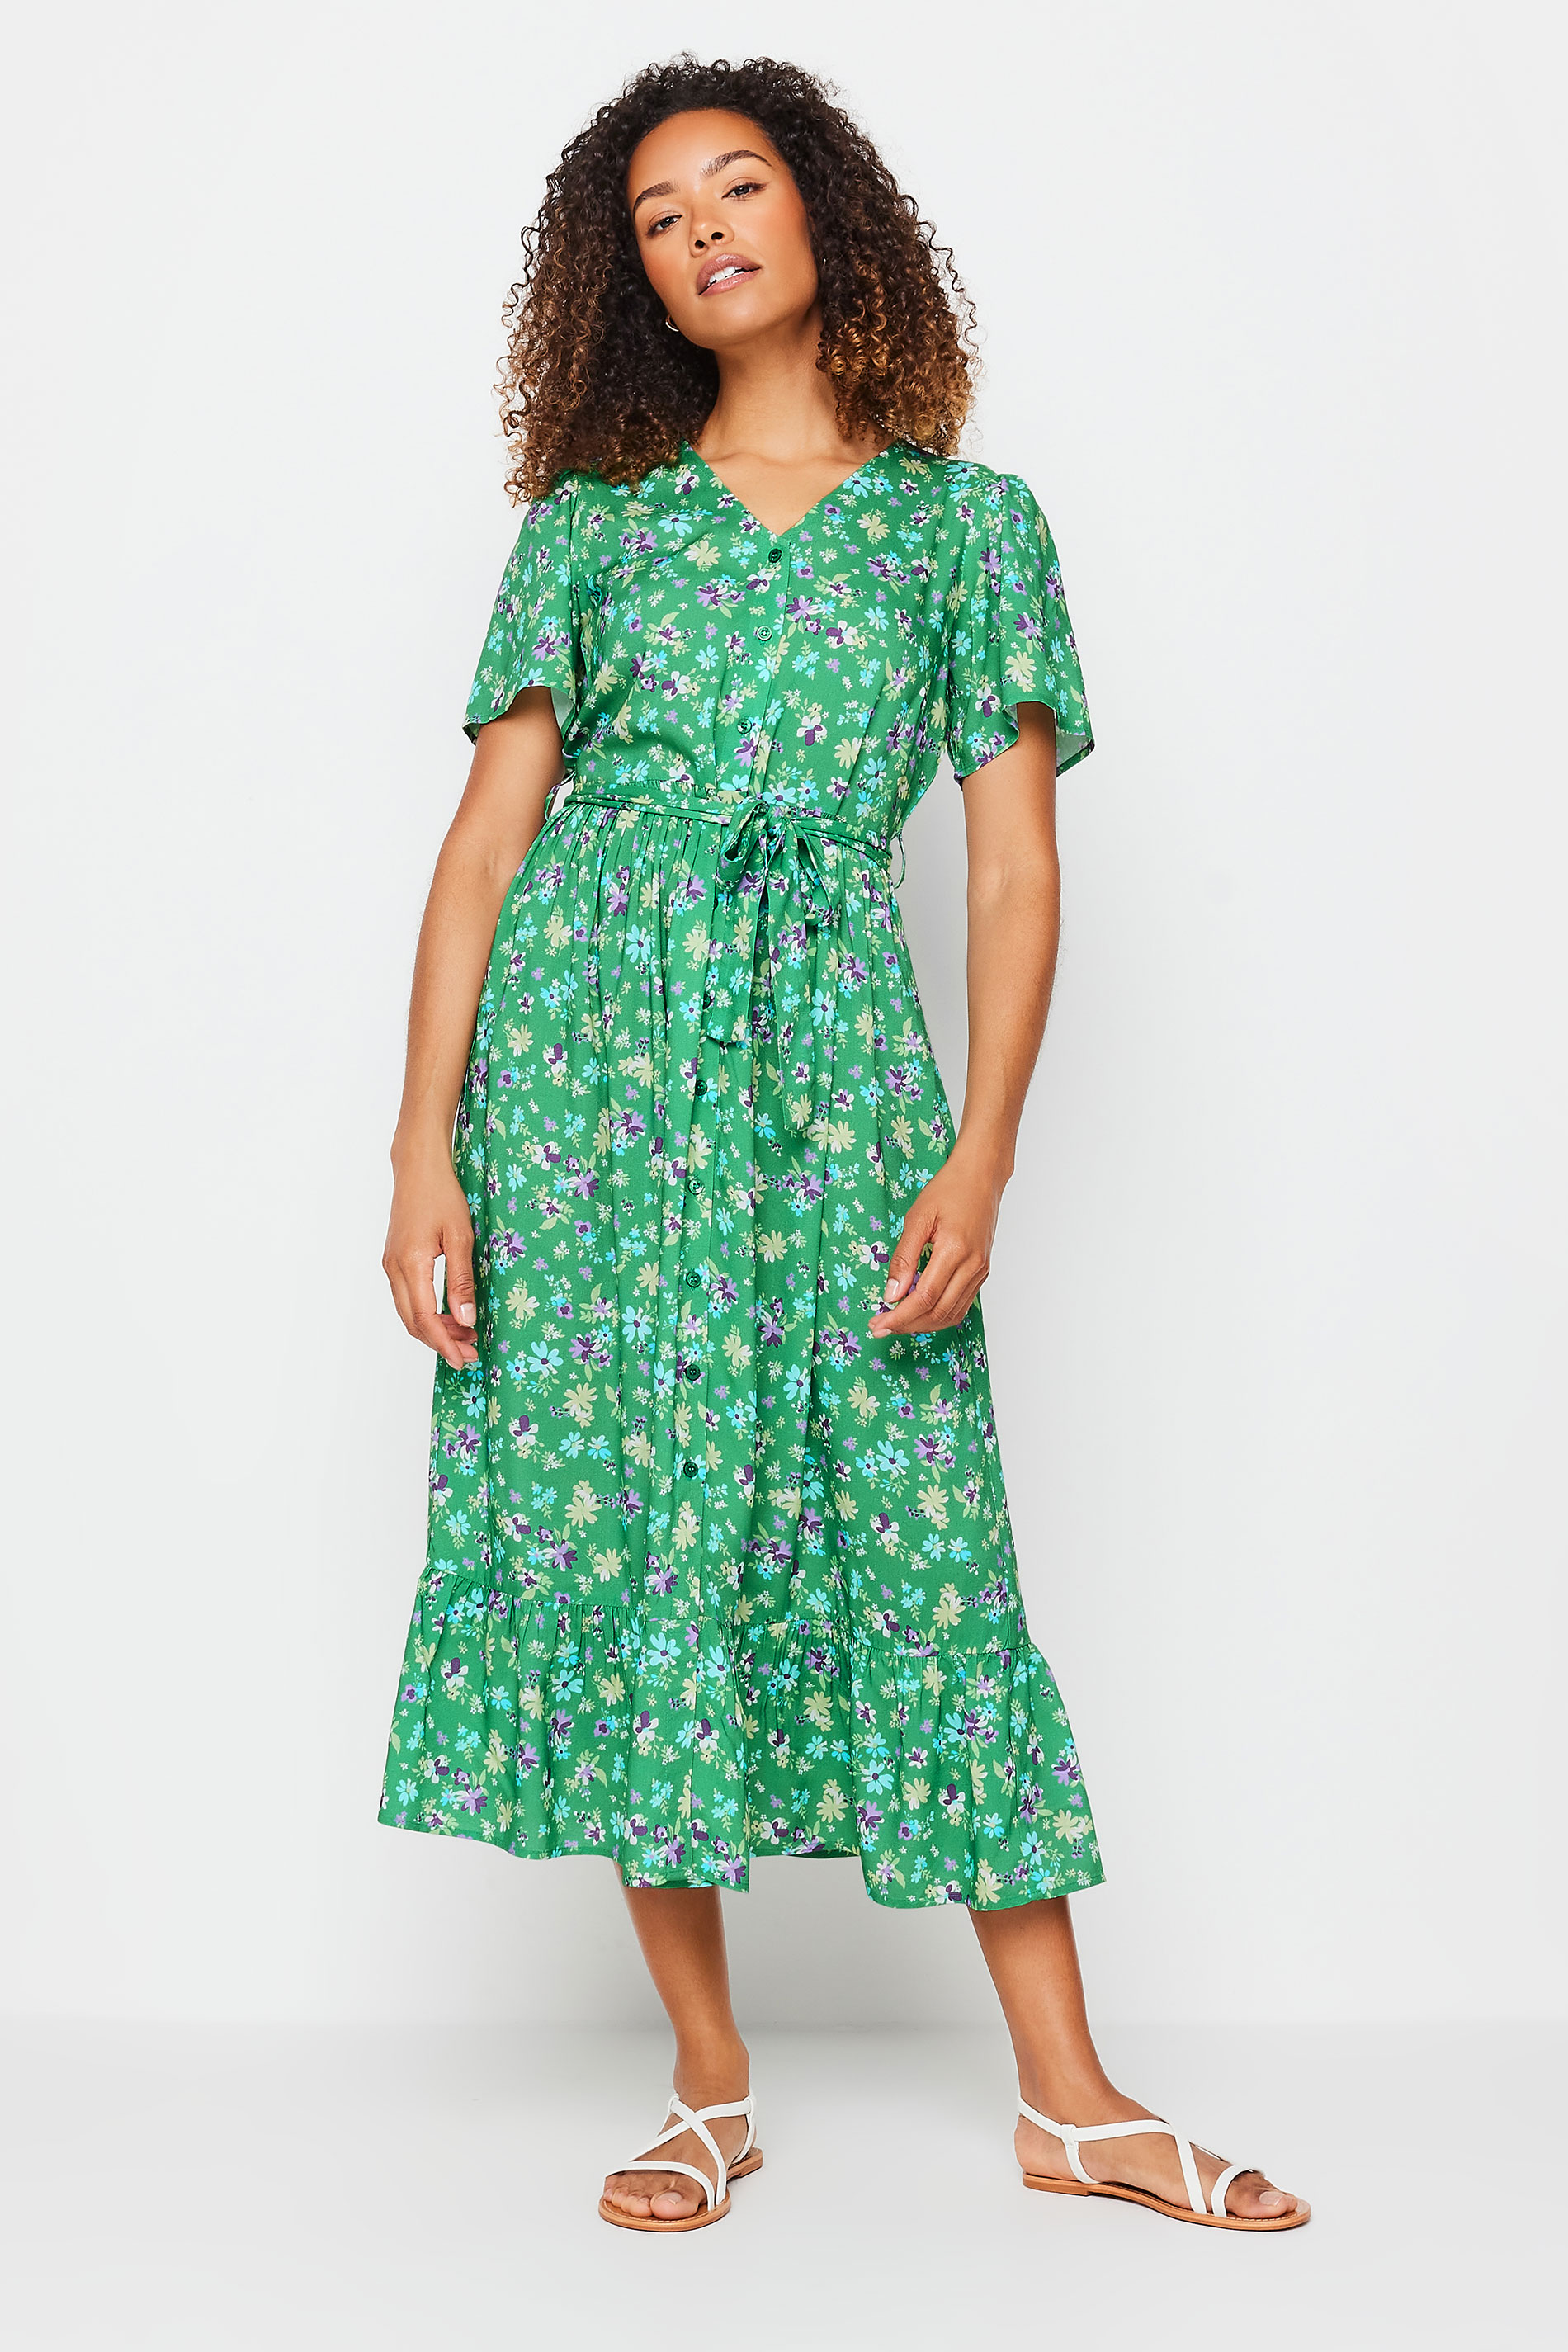 M&Co Green Floral Print Tie Waist Short Sleeve Maxi Dress | M&Co 3